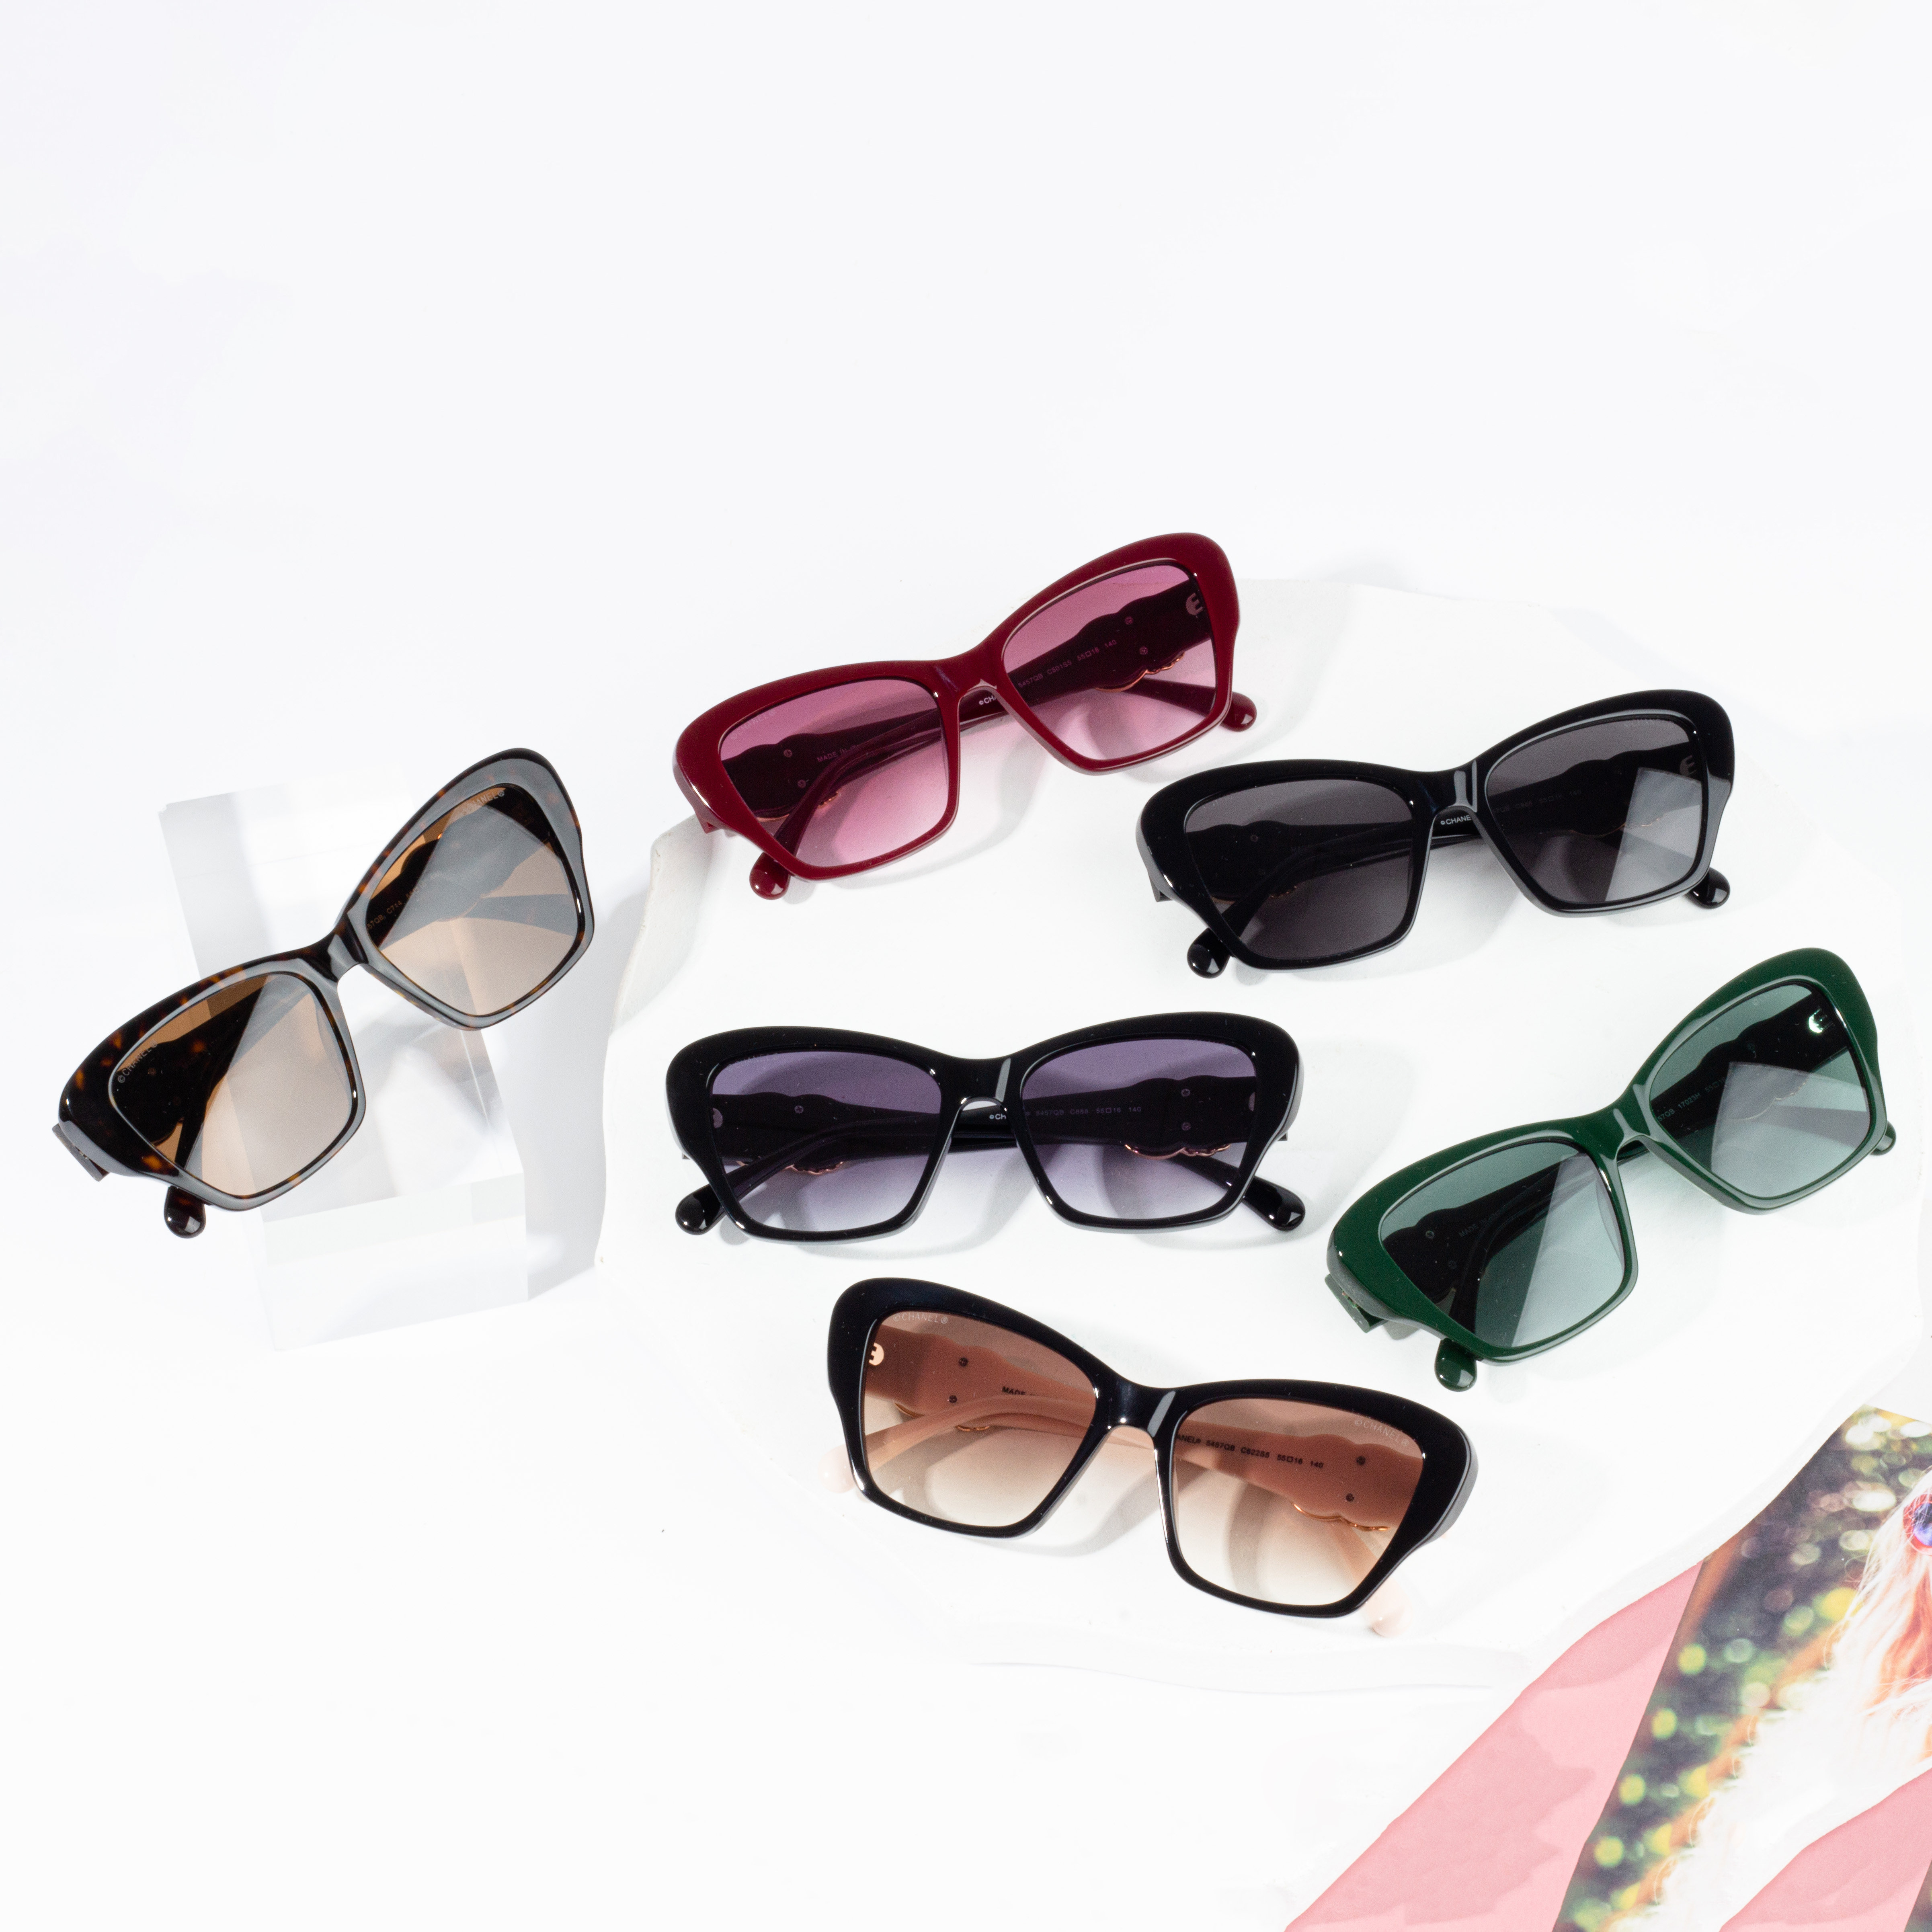 100% Original Factory Military Sunglasses - UV 400 Protection Lady Sunglasses Promotion – HJ EYEWEAR